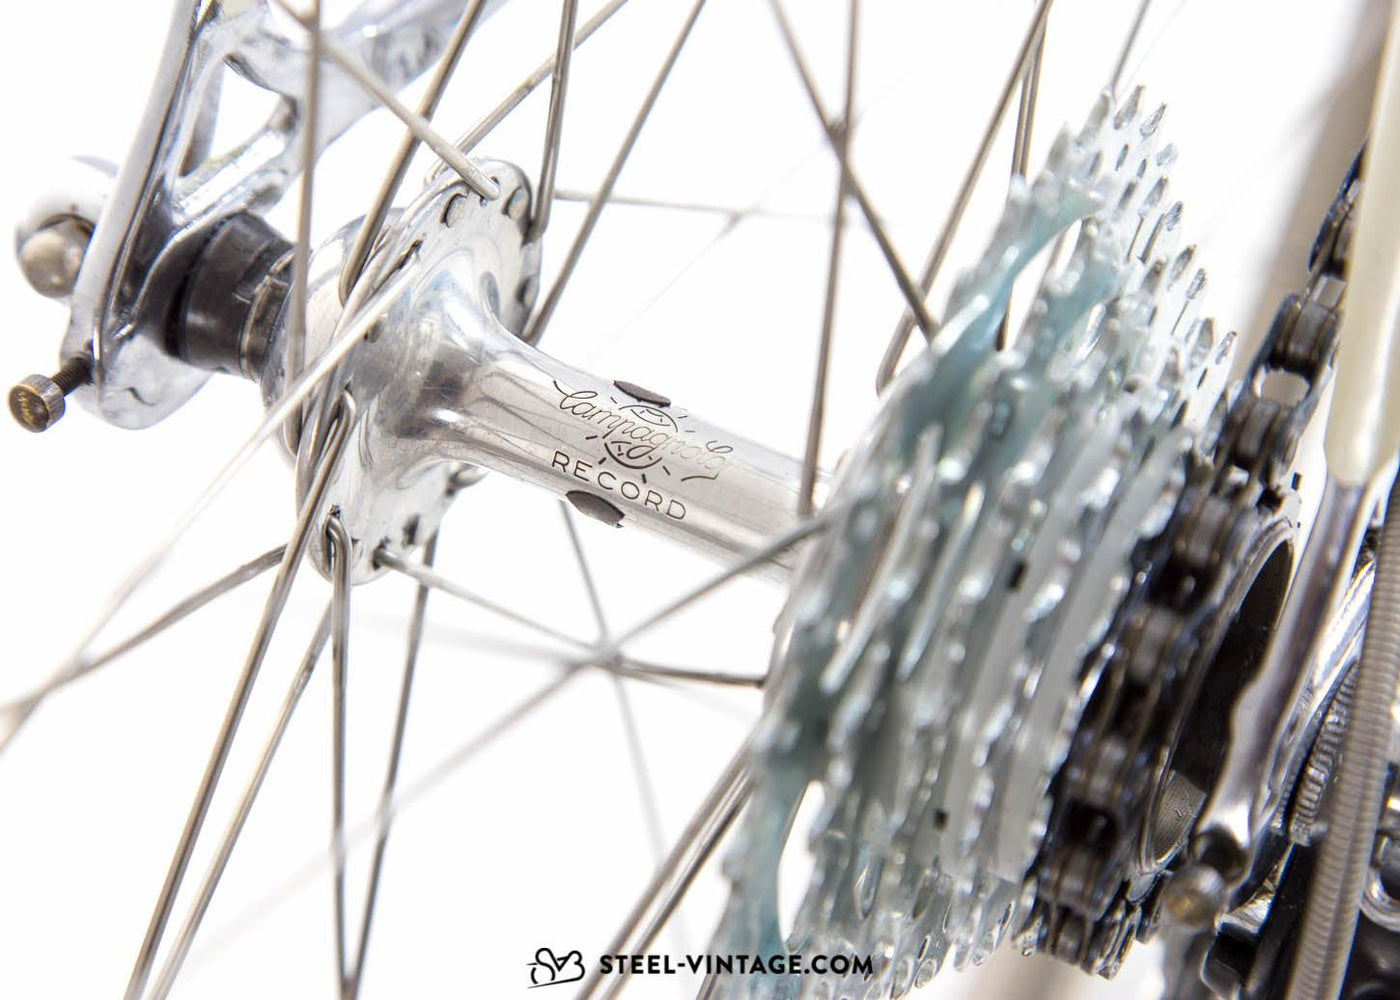 Eddy Merckx Professional Classic Racing Bike 1980s - Steel Vintage Bikes